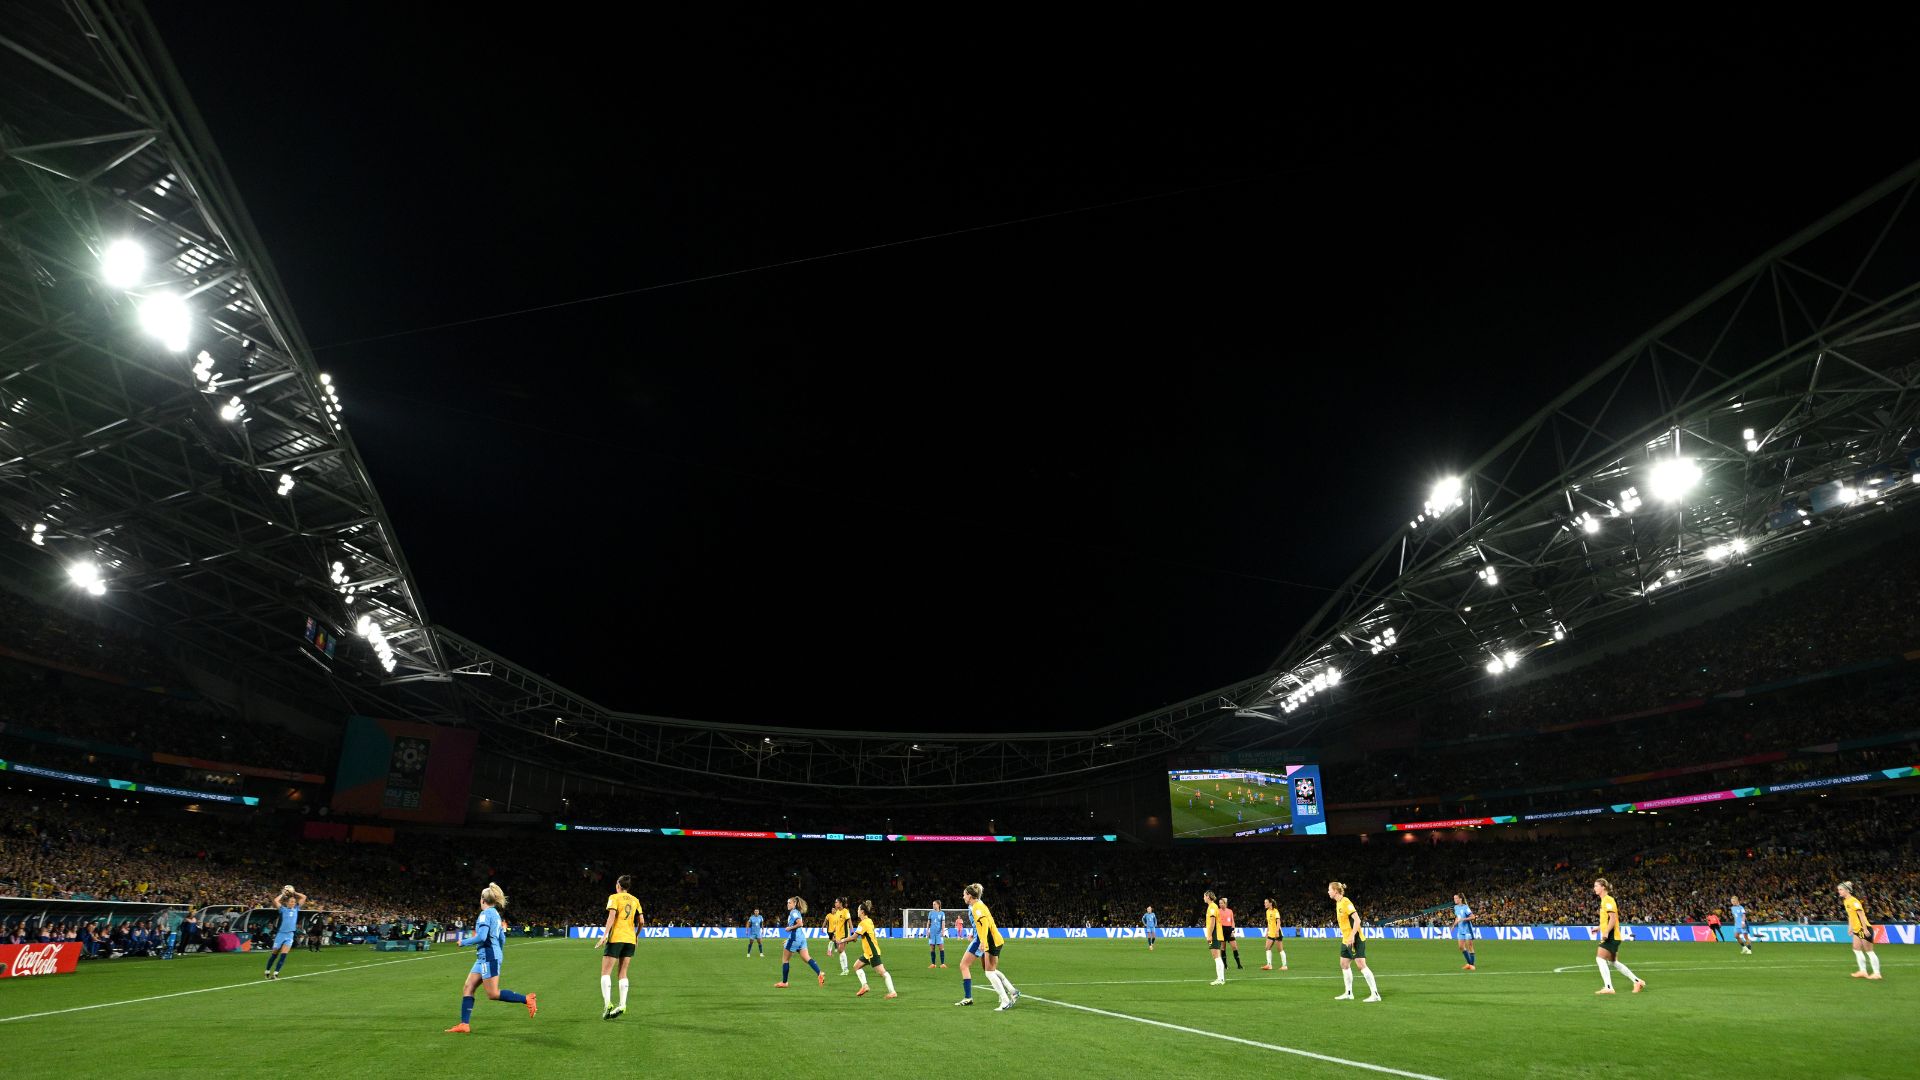 Accor Stadium, palco da final da Copa do Mundo 2023